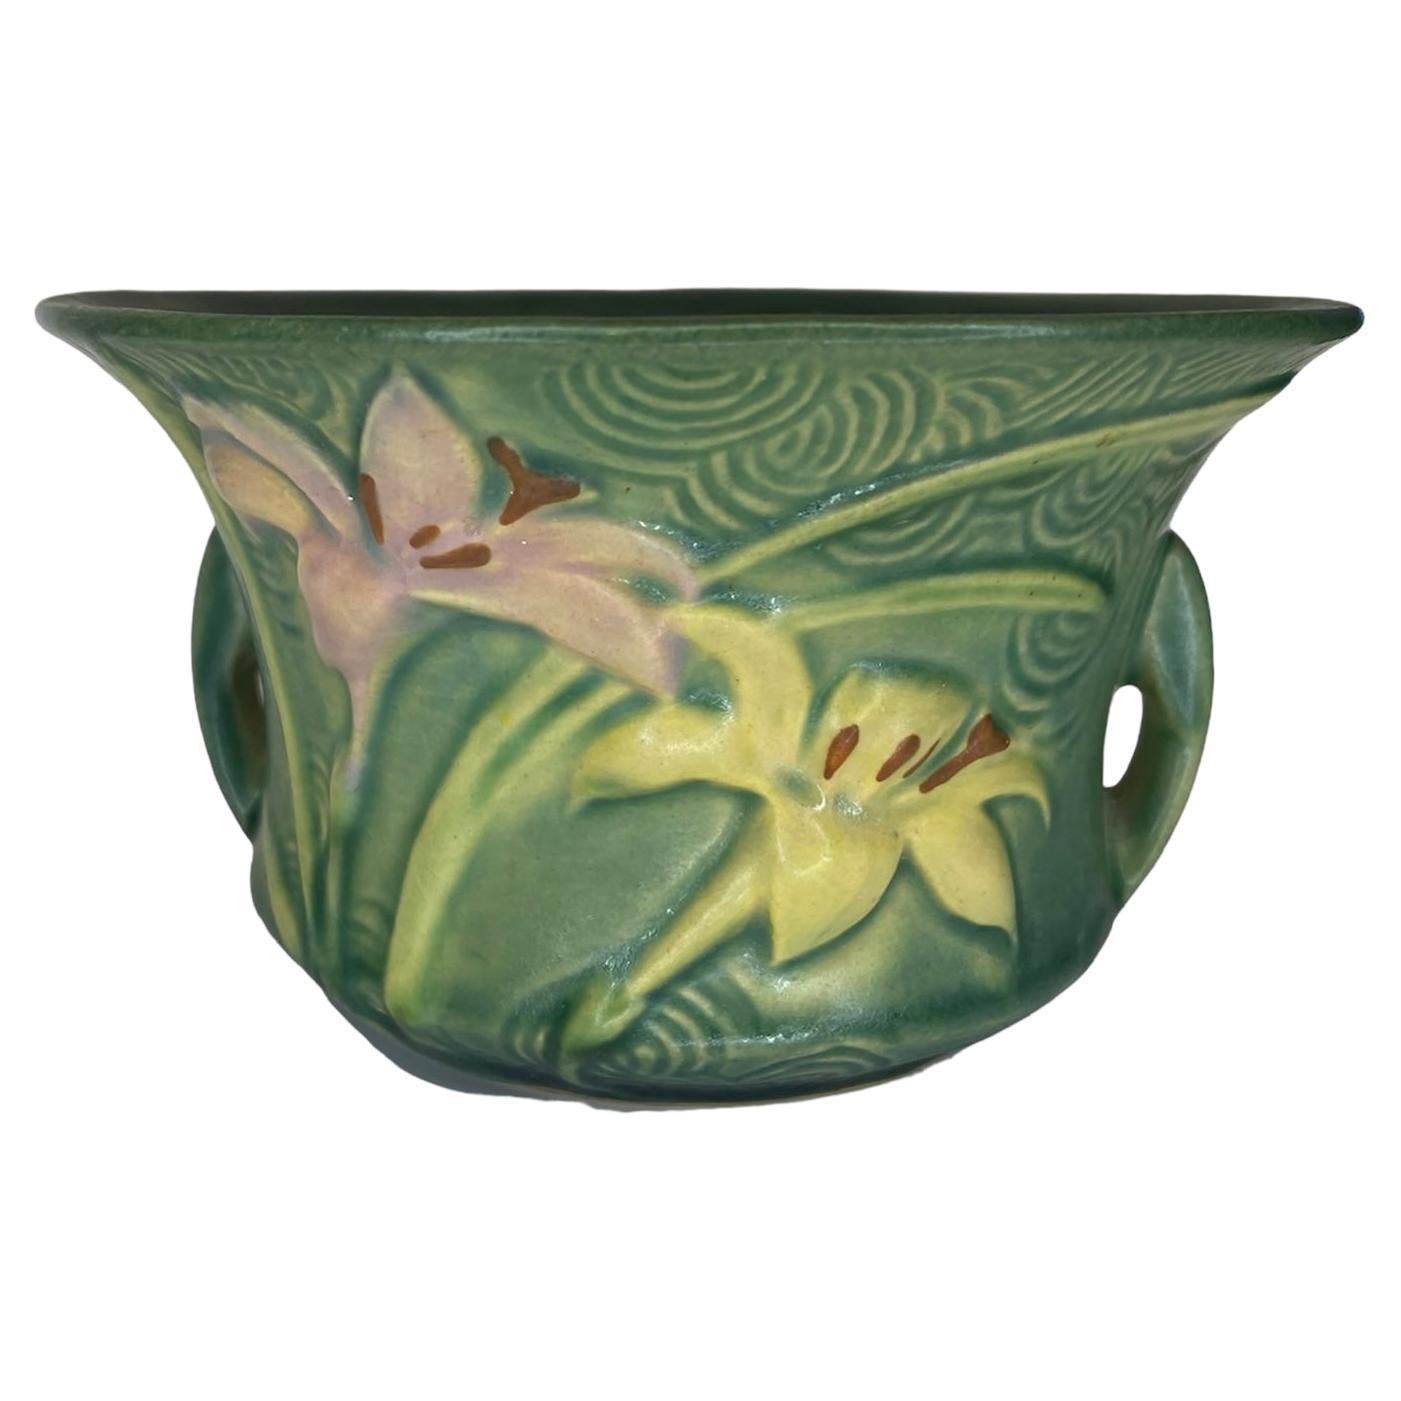 Roseville Art Pottery Zephyr Lilies Pattern Bowl